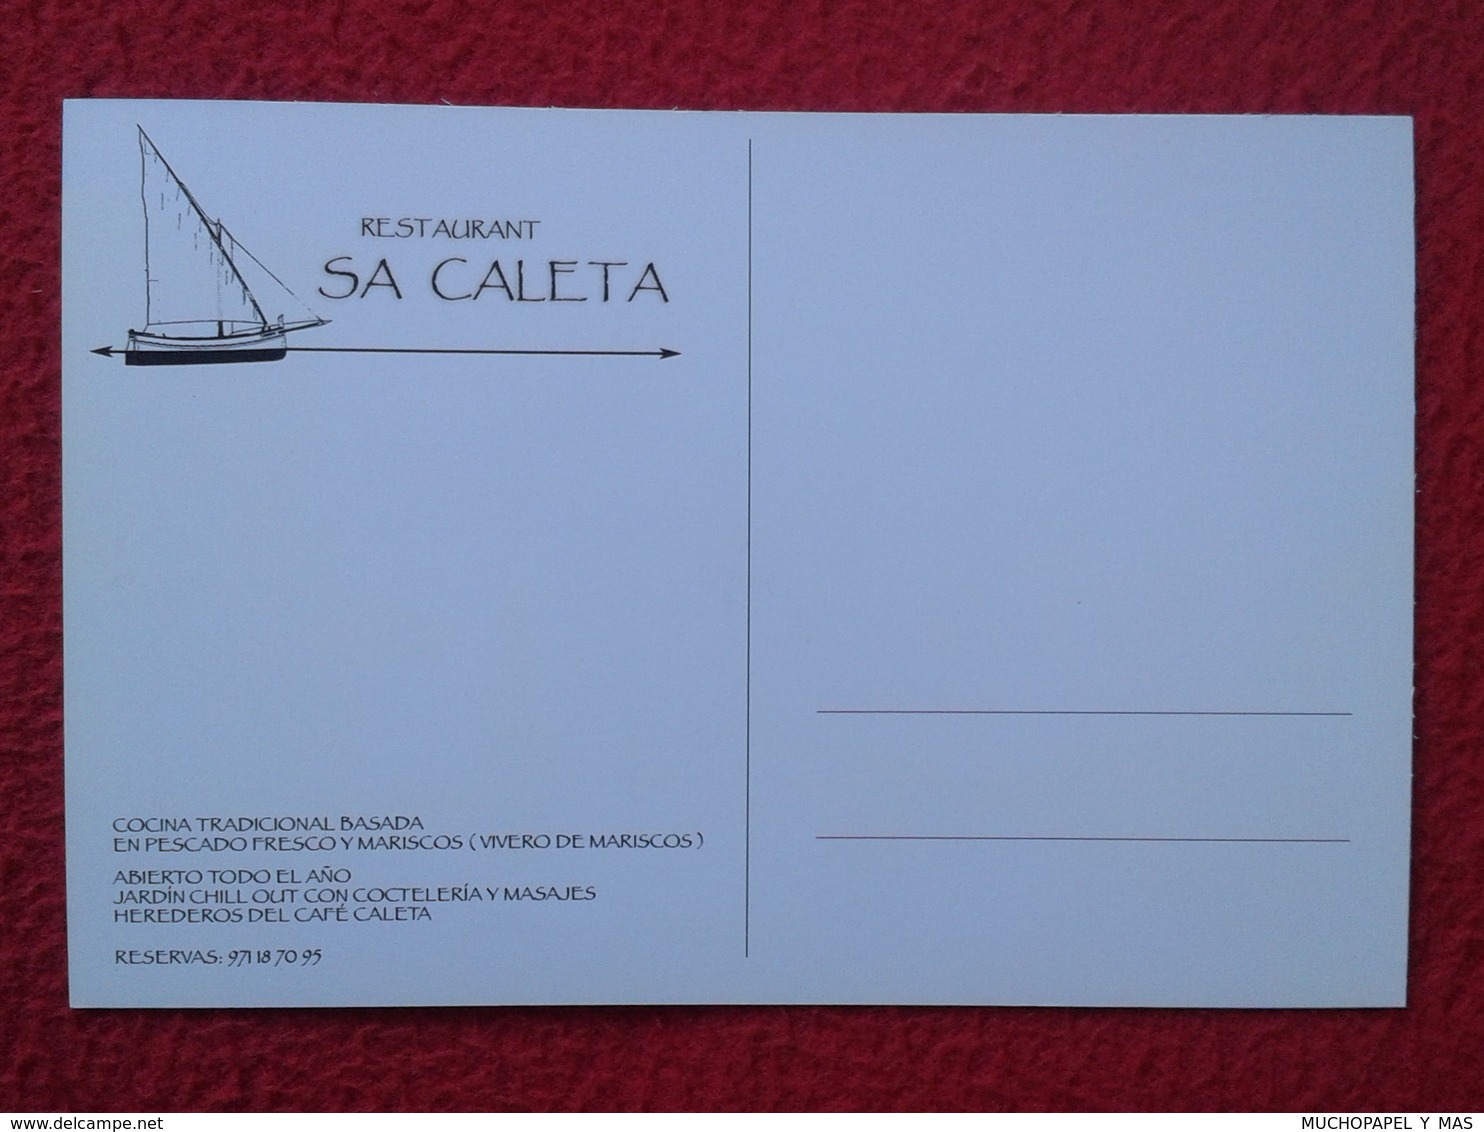 POSTAL POST CARD CARTE POSTALE PUBLICITARIA PUBLICIDAD ADVERTISING IBIZA BALEARIC ISLANDS SPAIN RESTAURANT SA CALETA VER - Publicidad